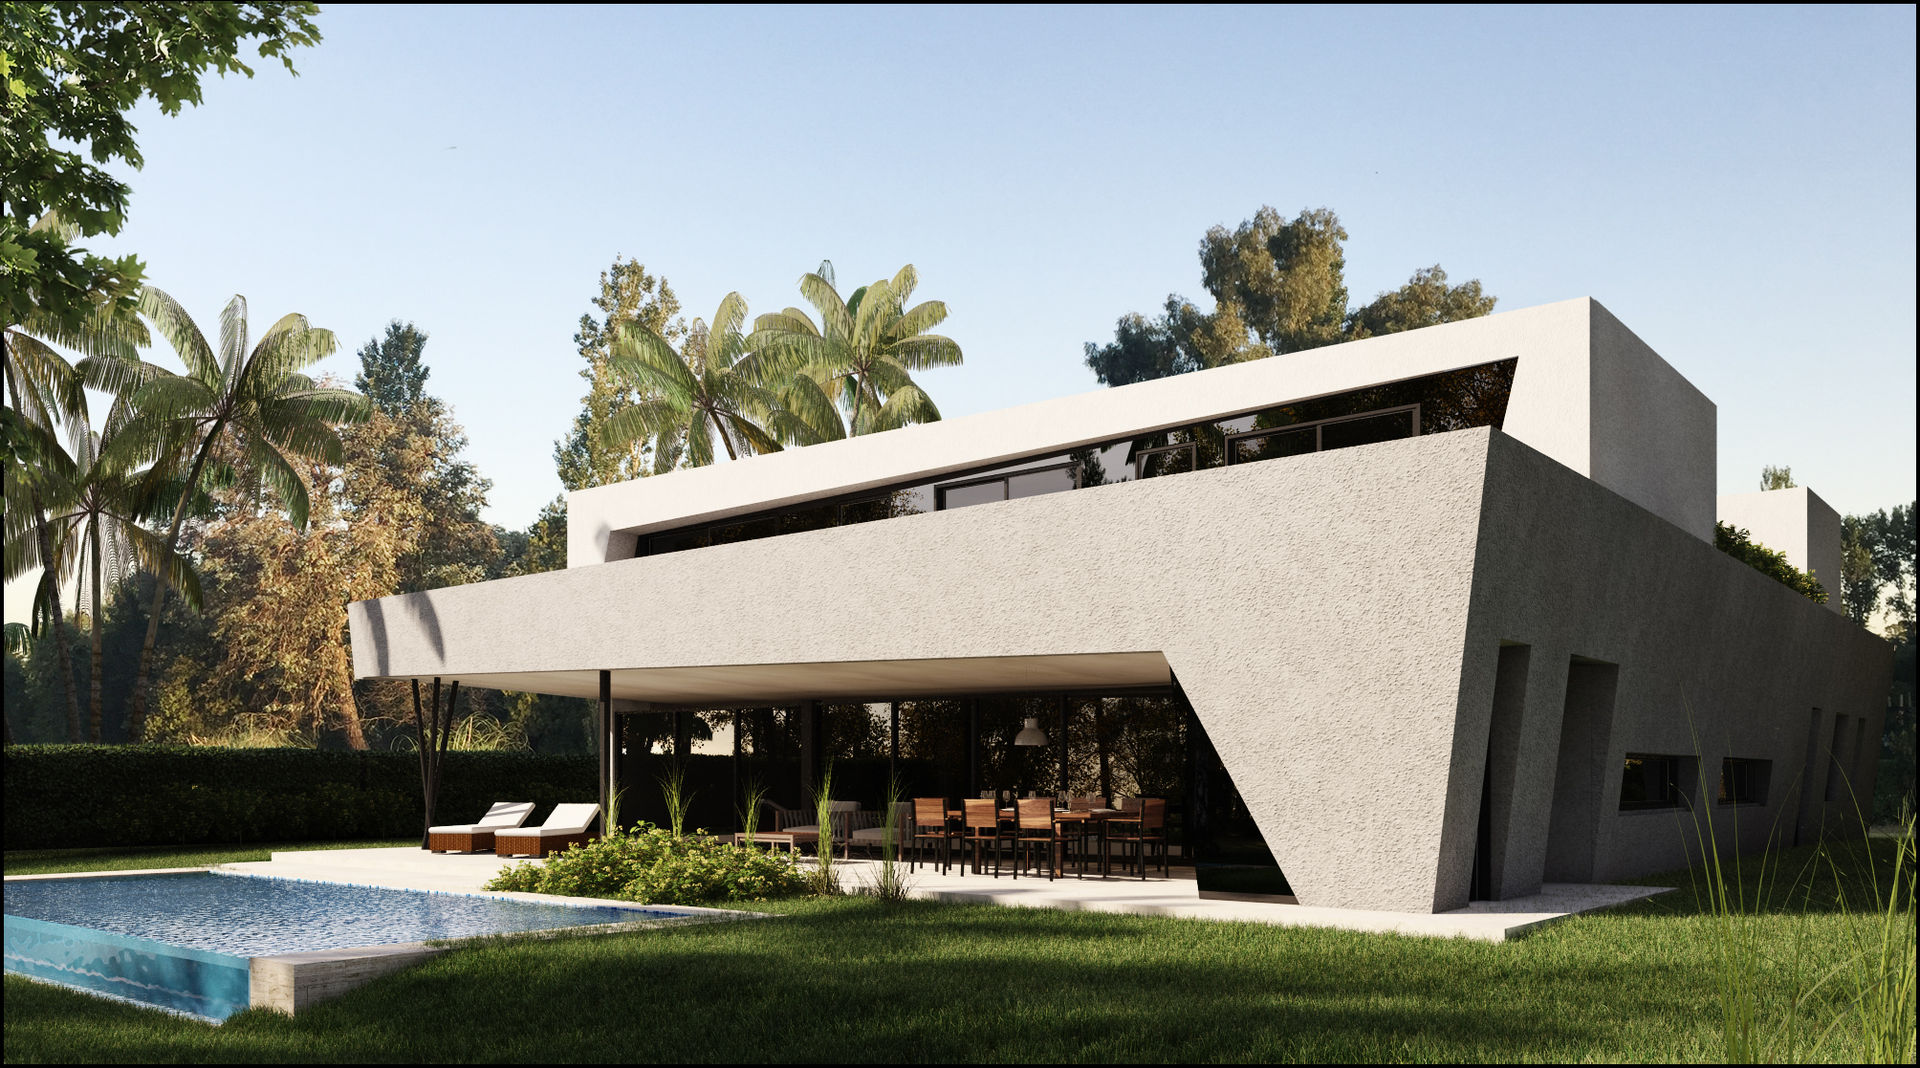 ESTILO MODERNO DE VANGUARDIA, Maximiliano Lago Arquitectura - Estudio Azteca Maximiliano Lago Arquitectura - Estudio Azteca Moderne Häuser